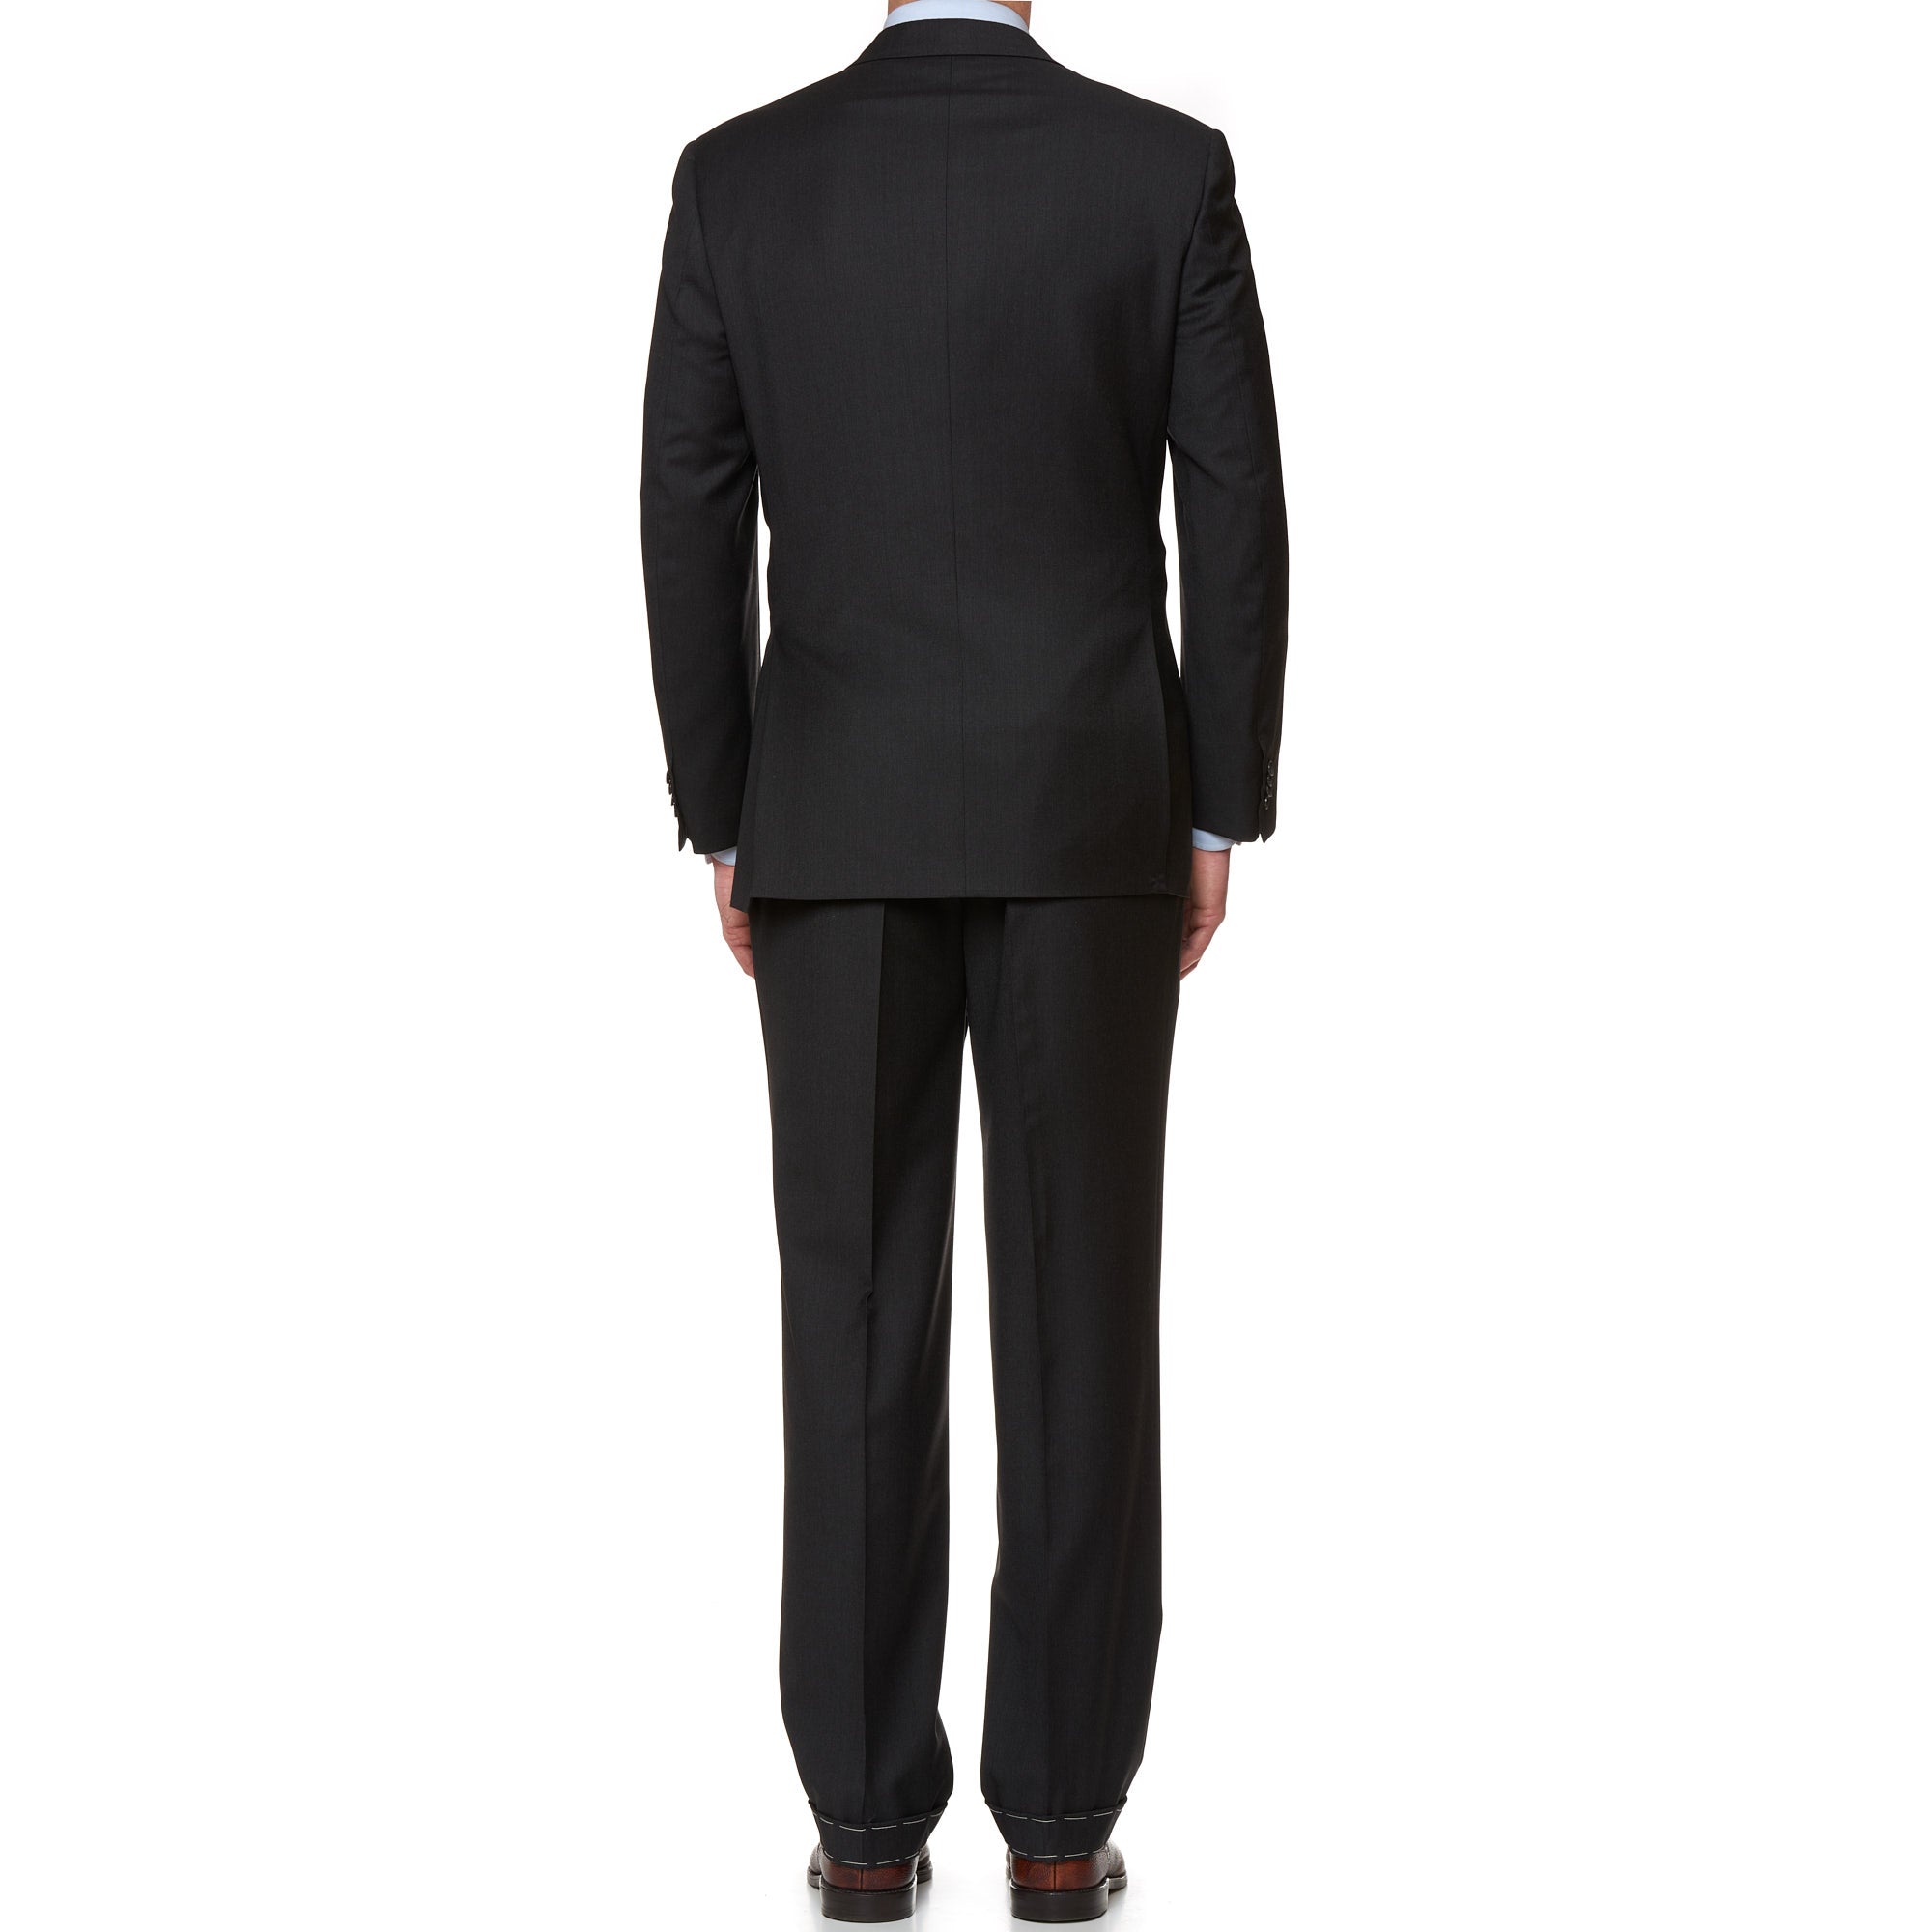 Giovanni Testi Beige / Silver Lurex 100% Linen Suit With Bow Tie GT1CP-545  - $199.90 :: Upscale Menswear - UpscaleMenswear.com